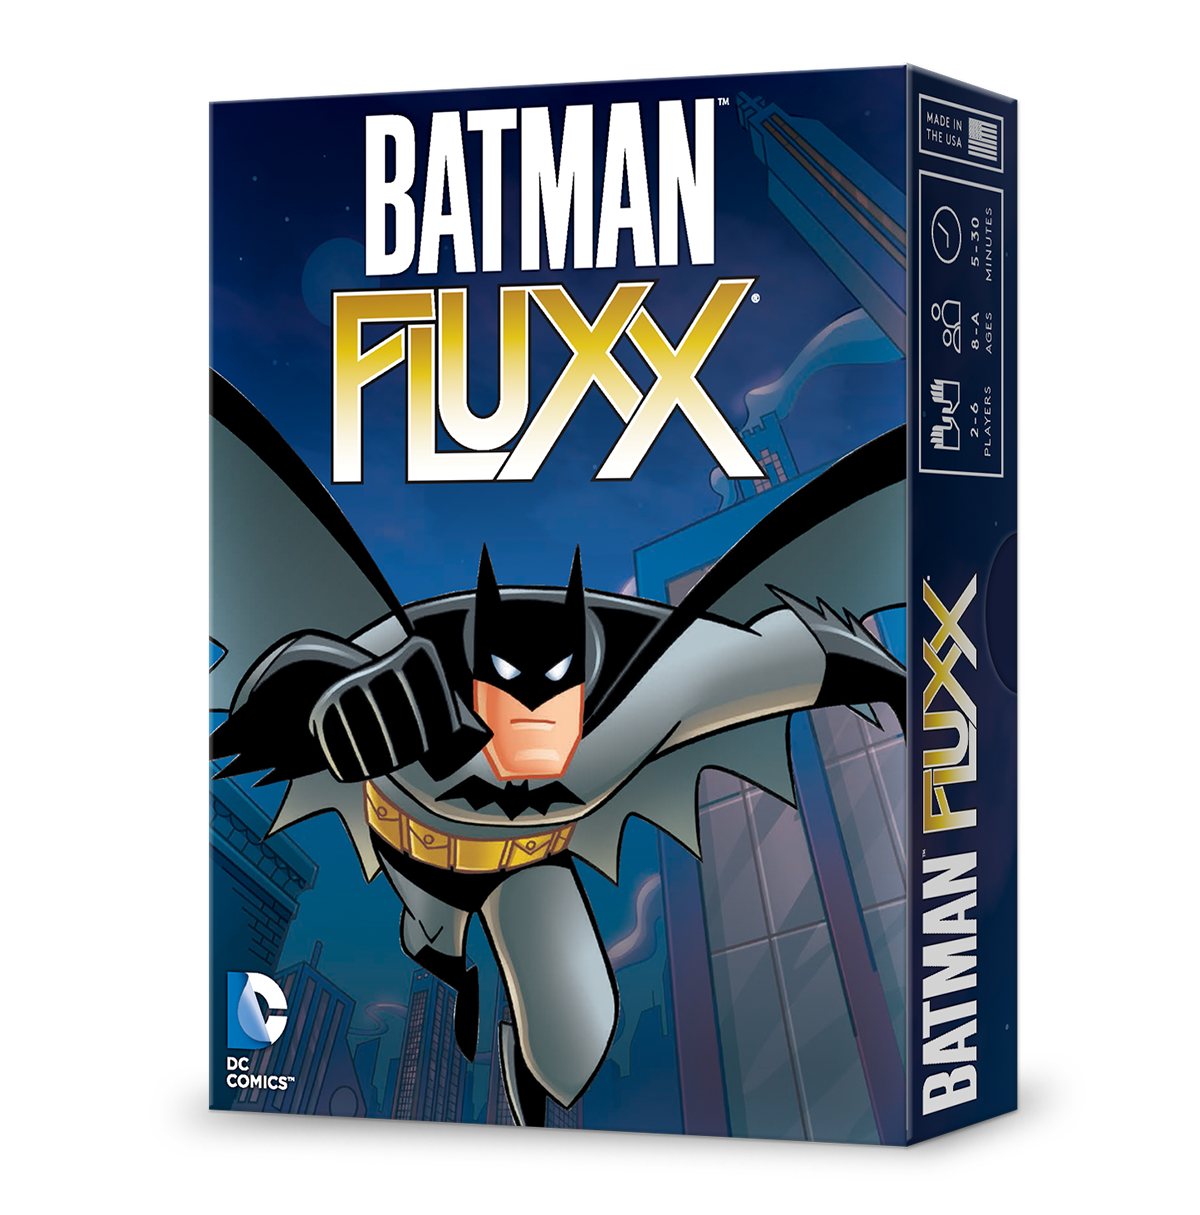 BatmanFluxx-Box-3d-lg